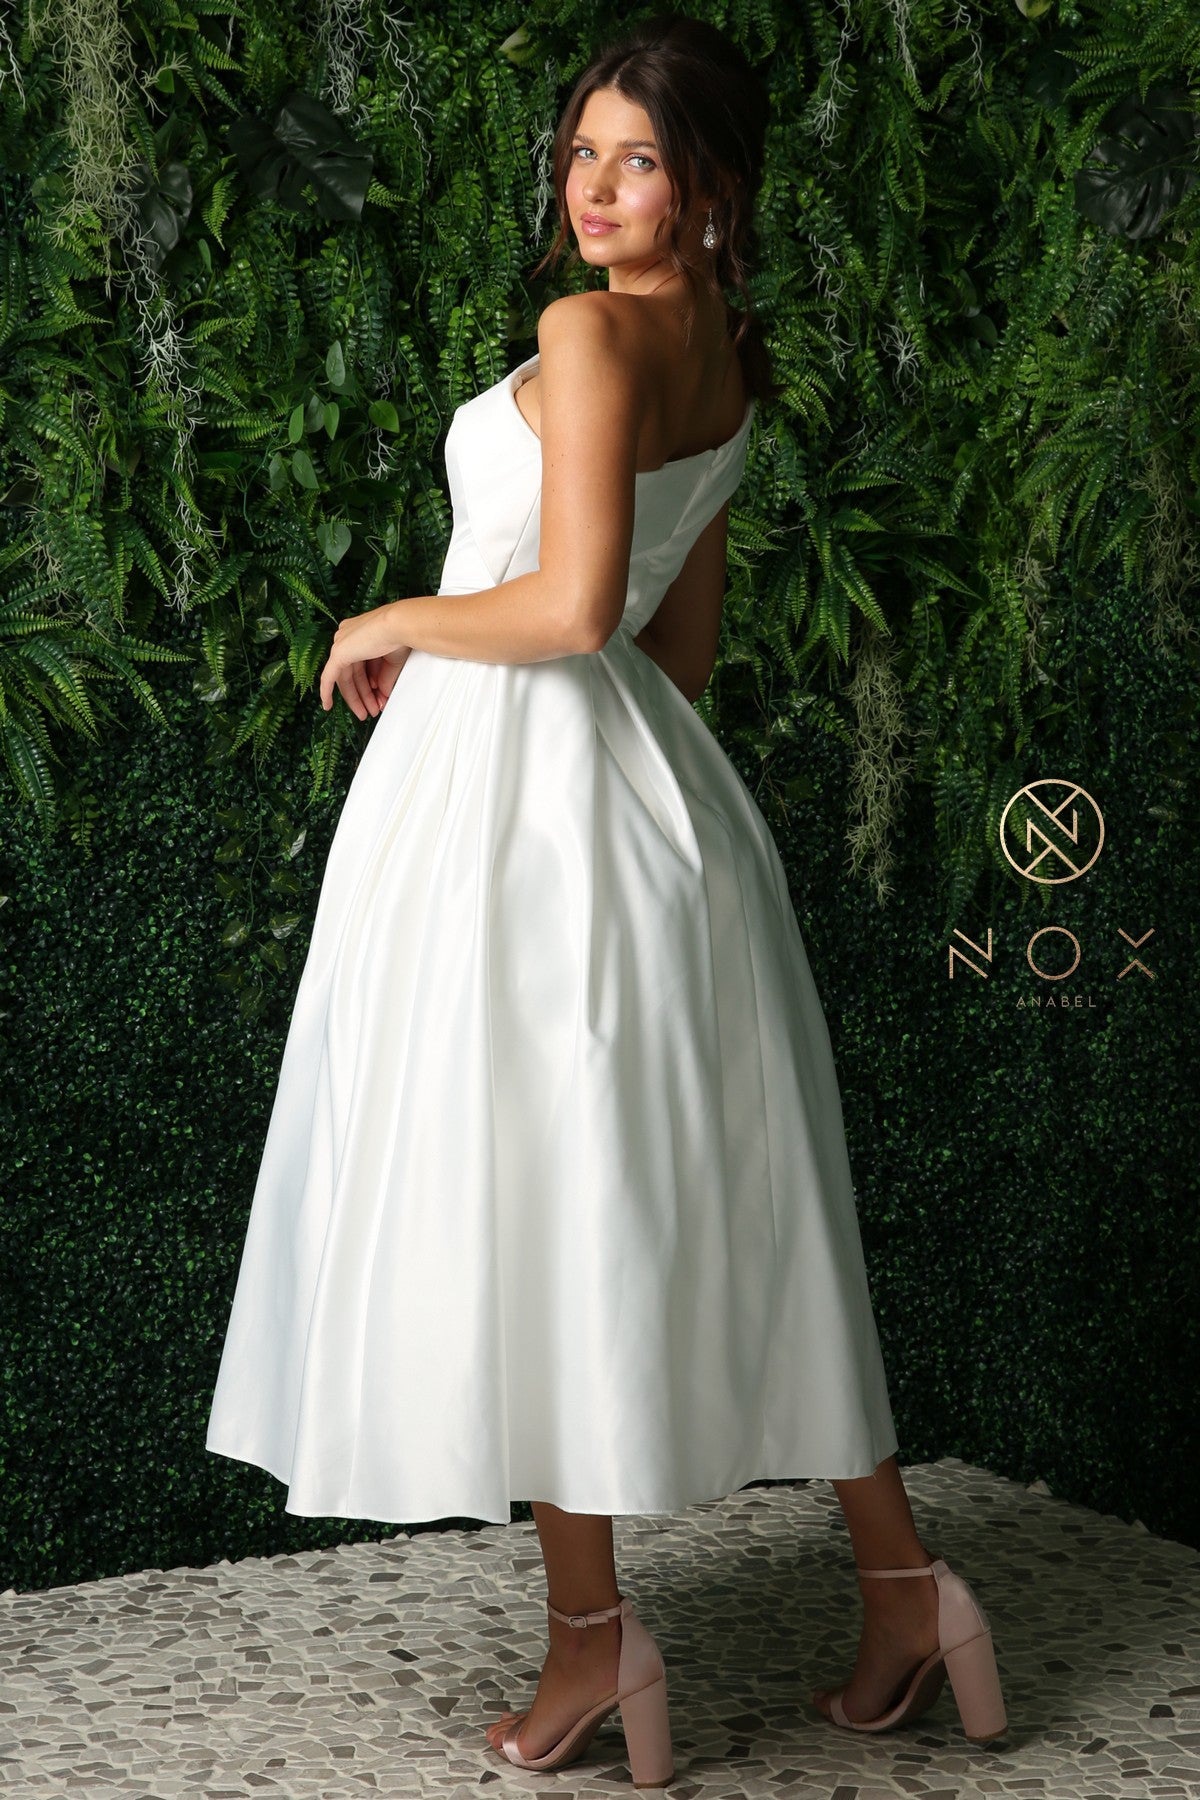 One Shoulder Tea Length Dress By Nox Anabel -JE931